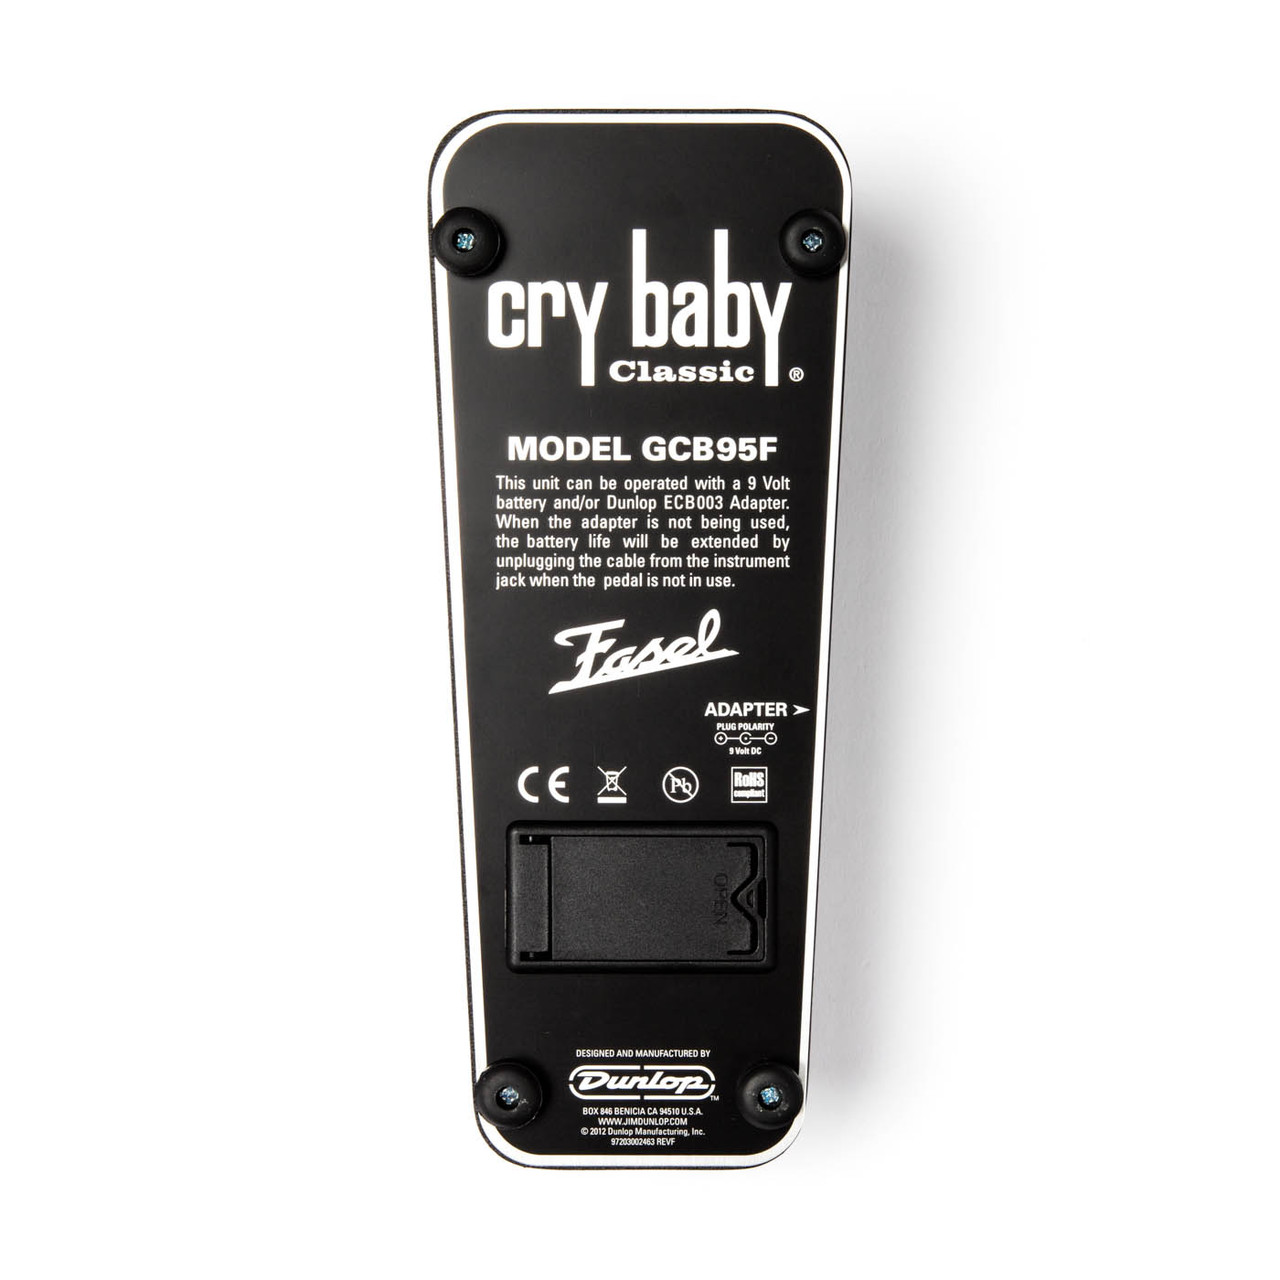 Cry baby classic! GCB-95F！ - 通販 - gofukuyasan.com